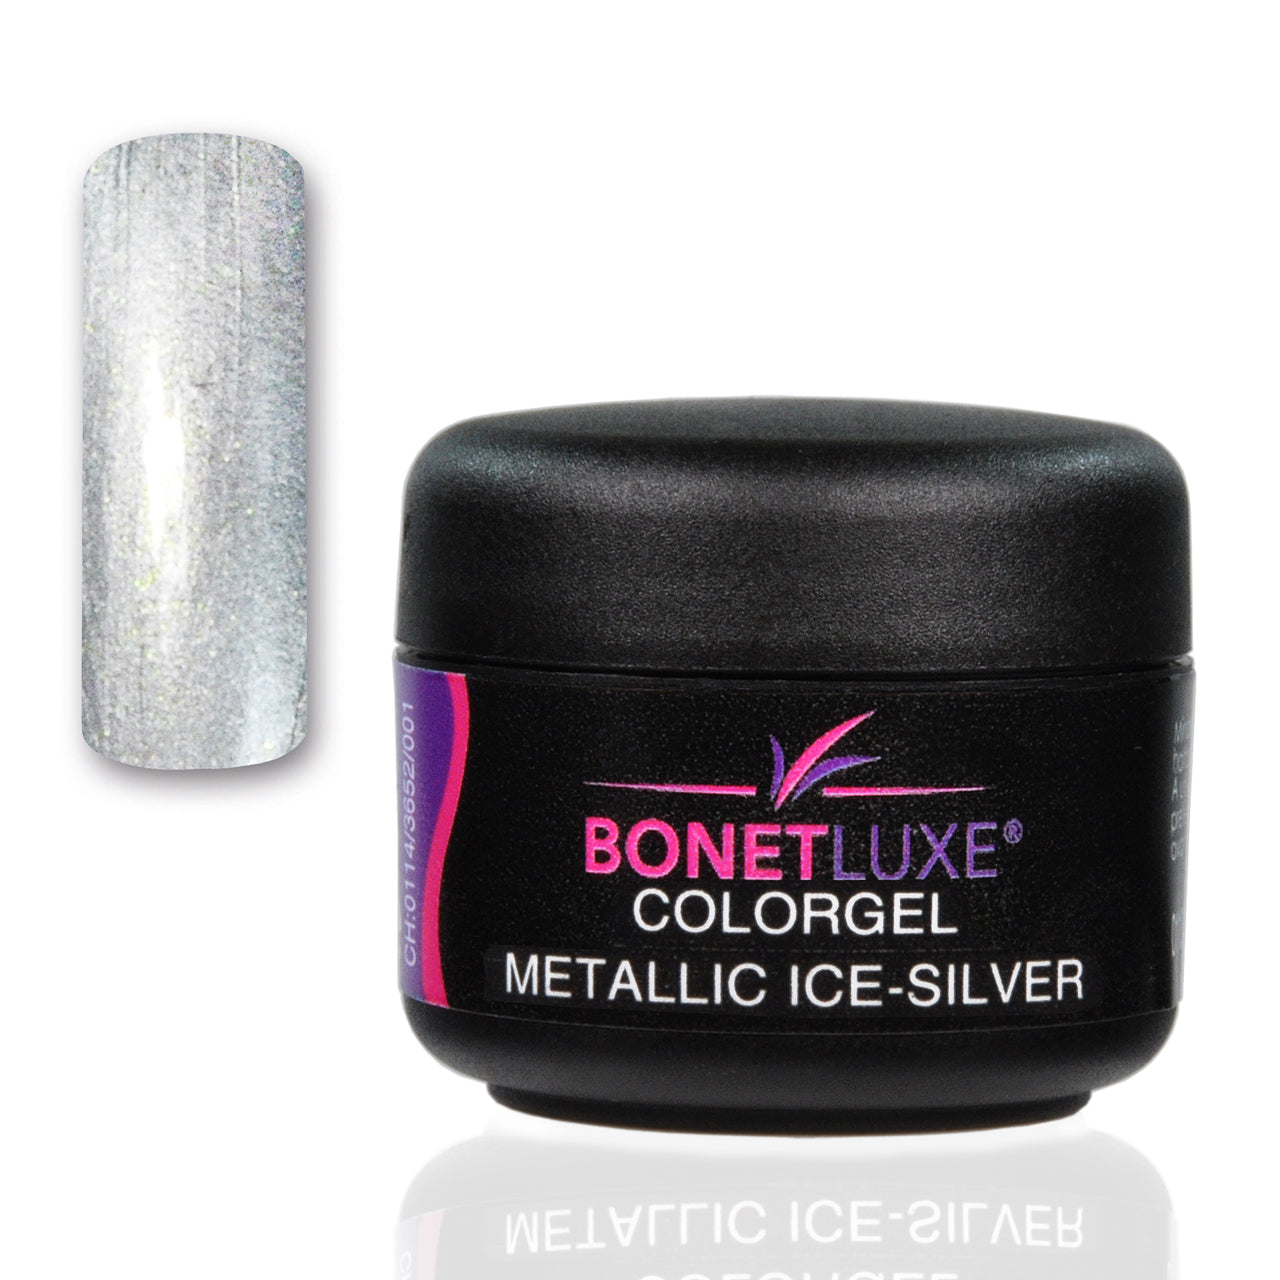 Bonetluxe Colorgel Metallic Ice Silver